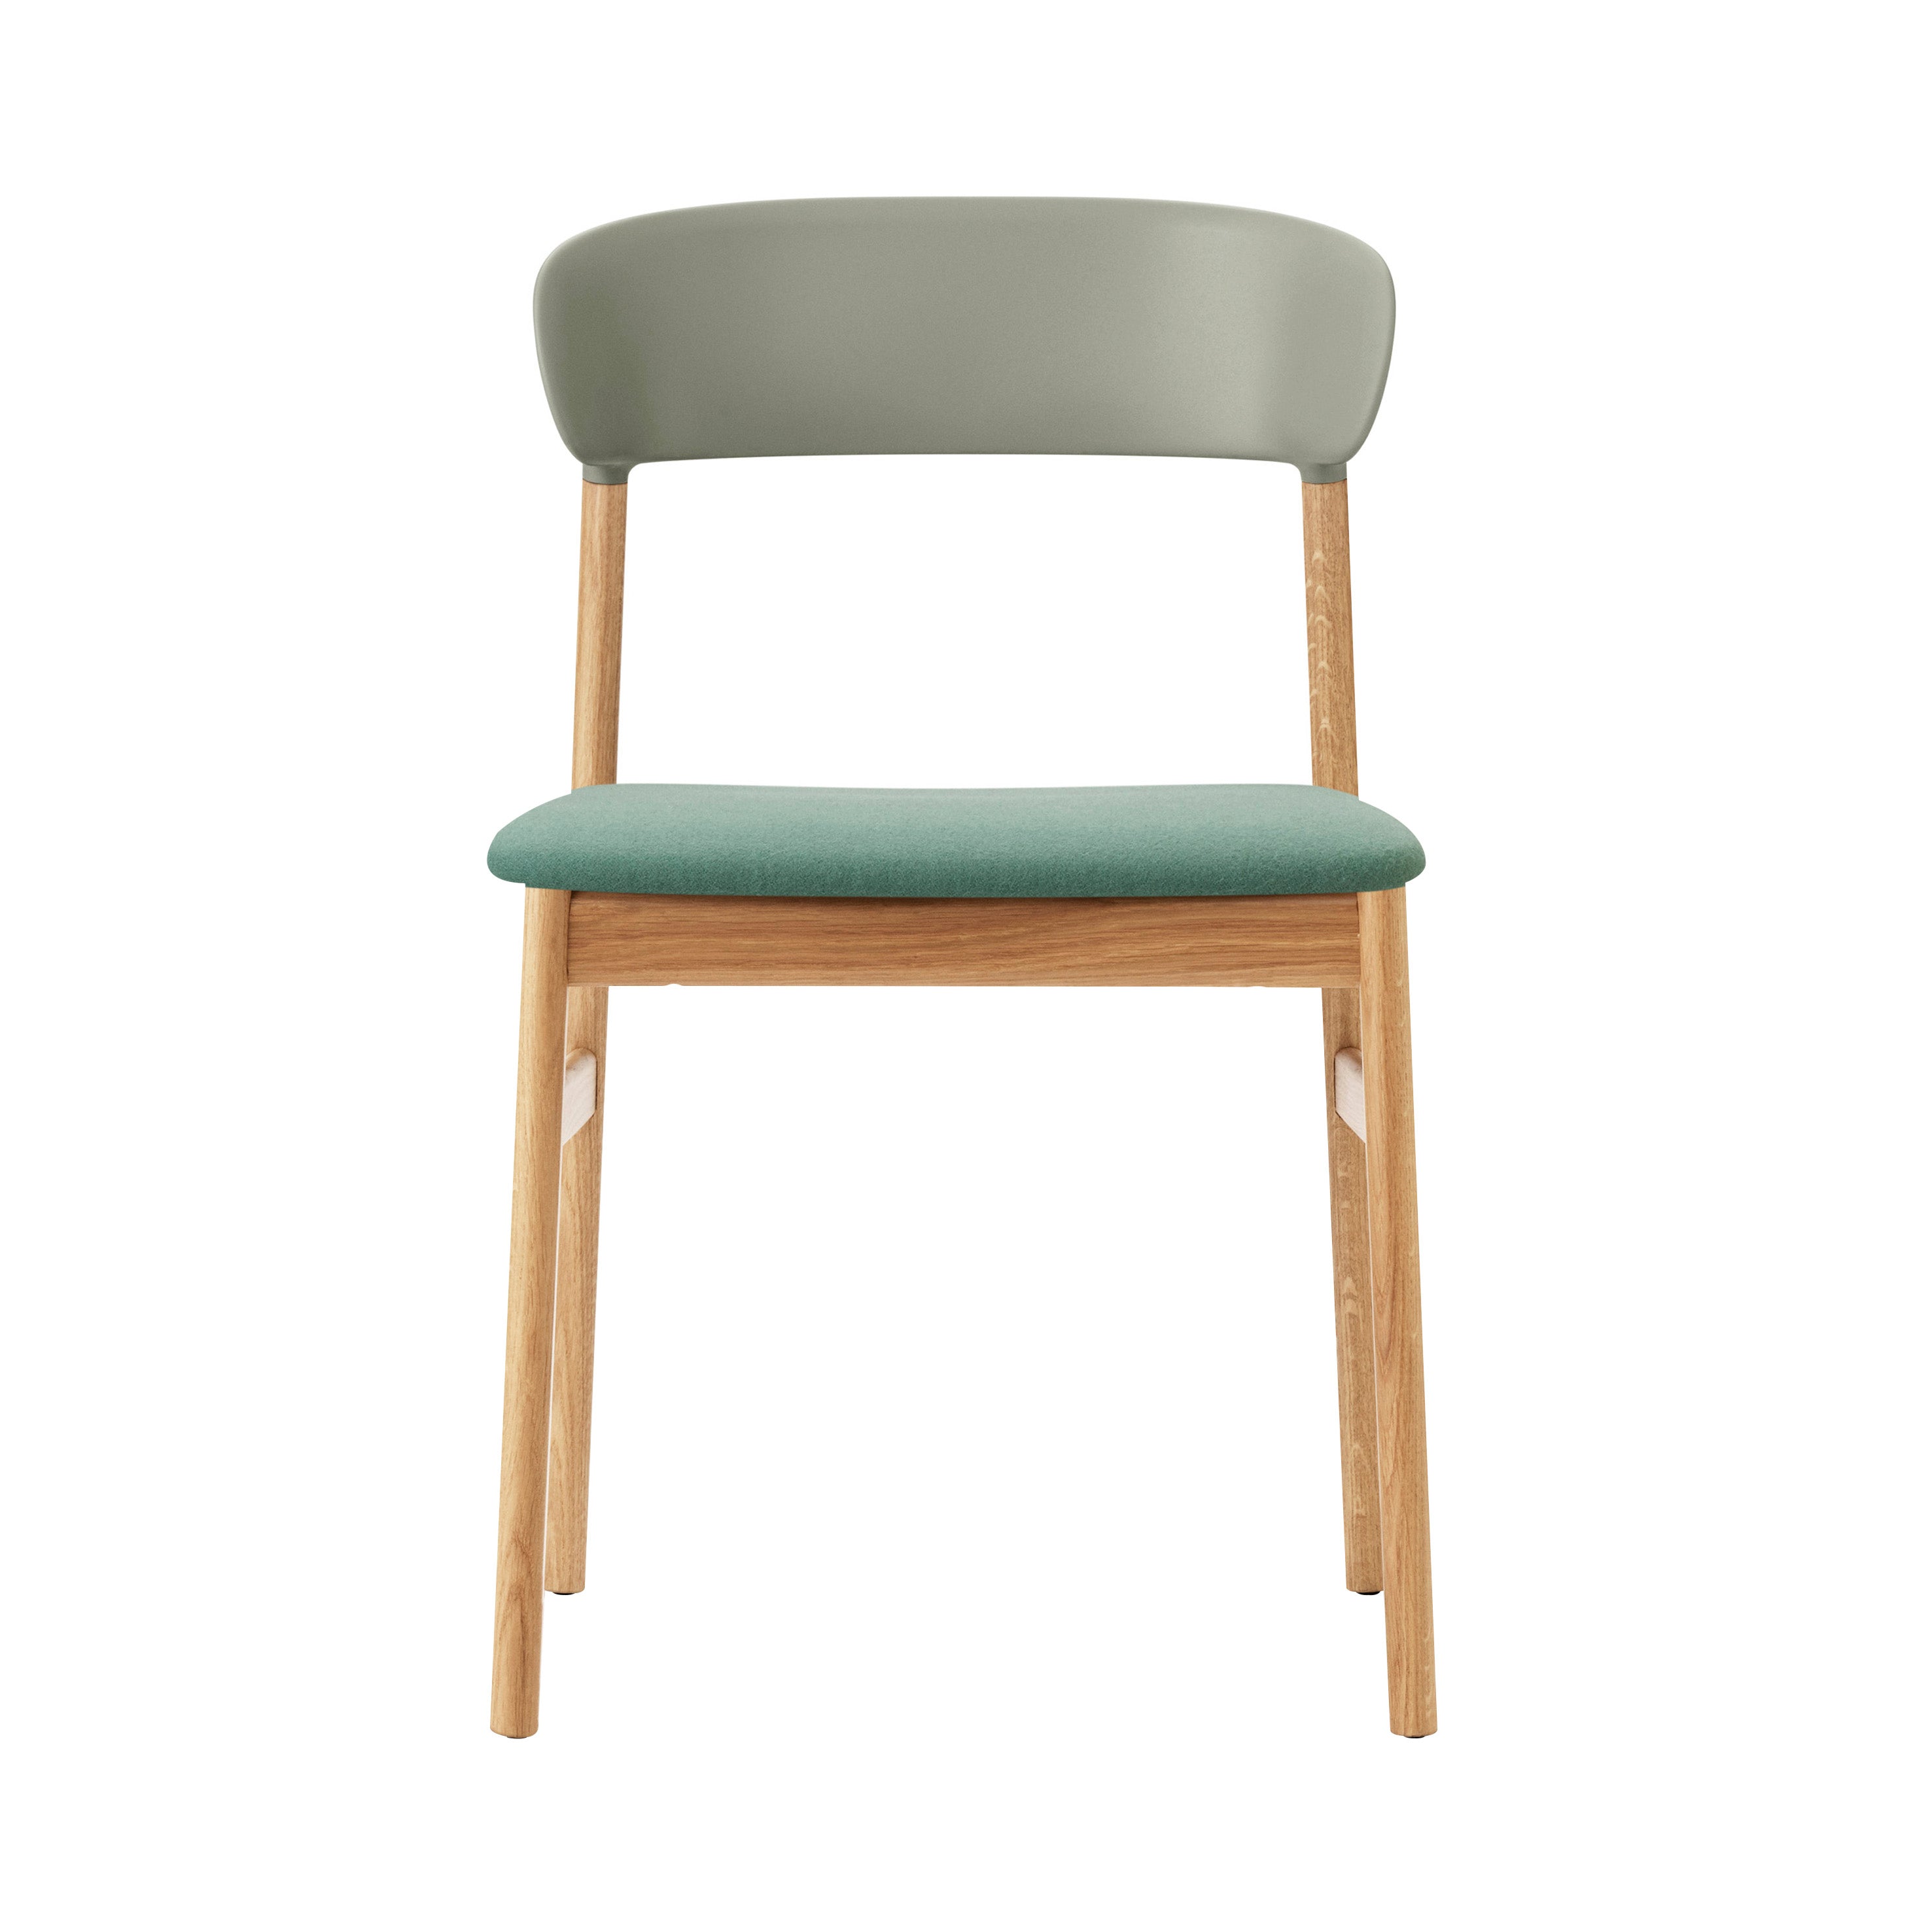 Herit Chair: Upholstered + Oak + Dusty Green + Synergy Dusty Green